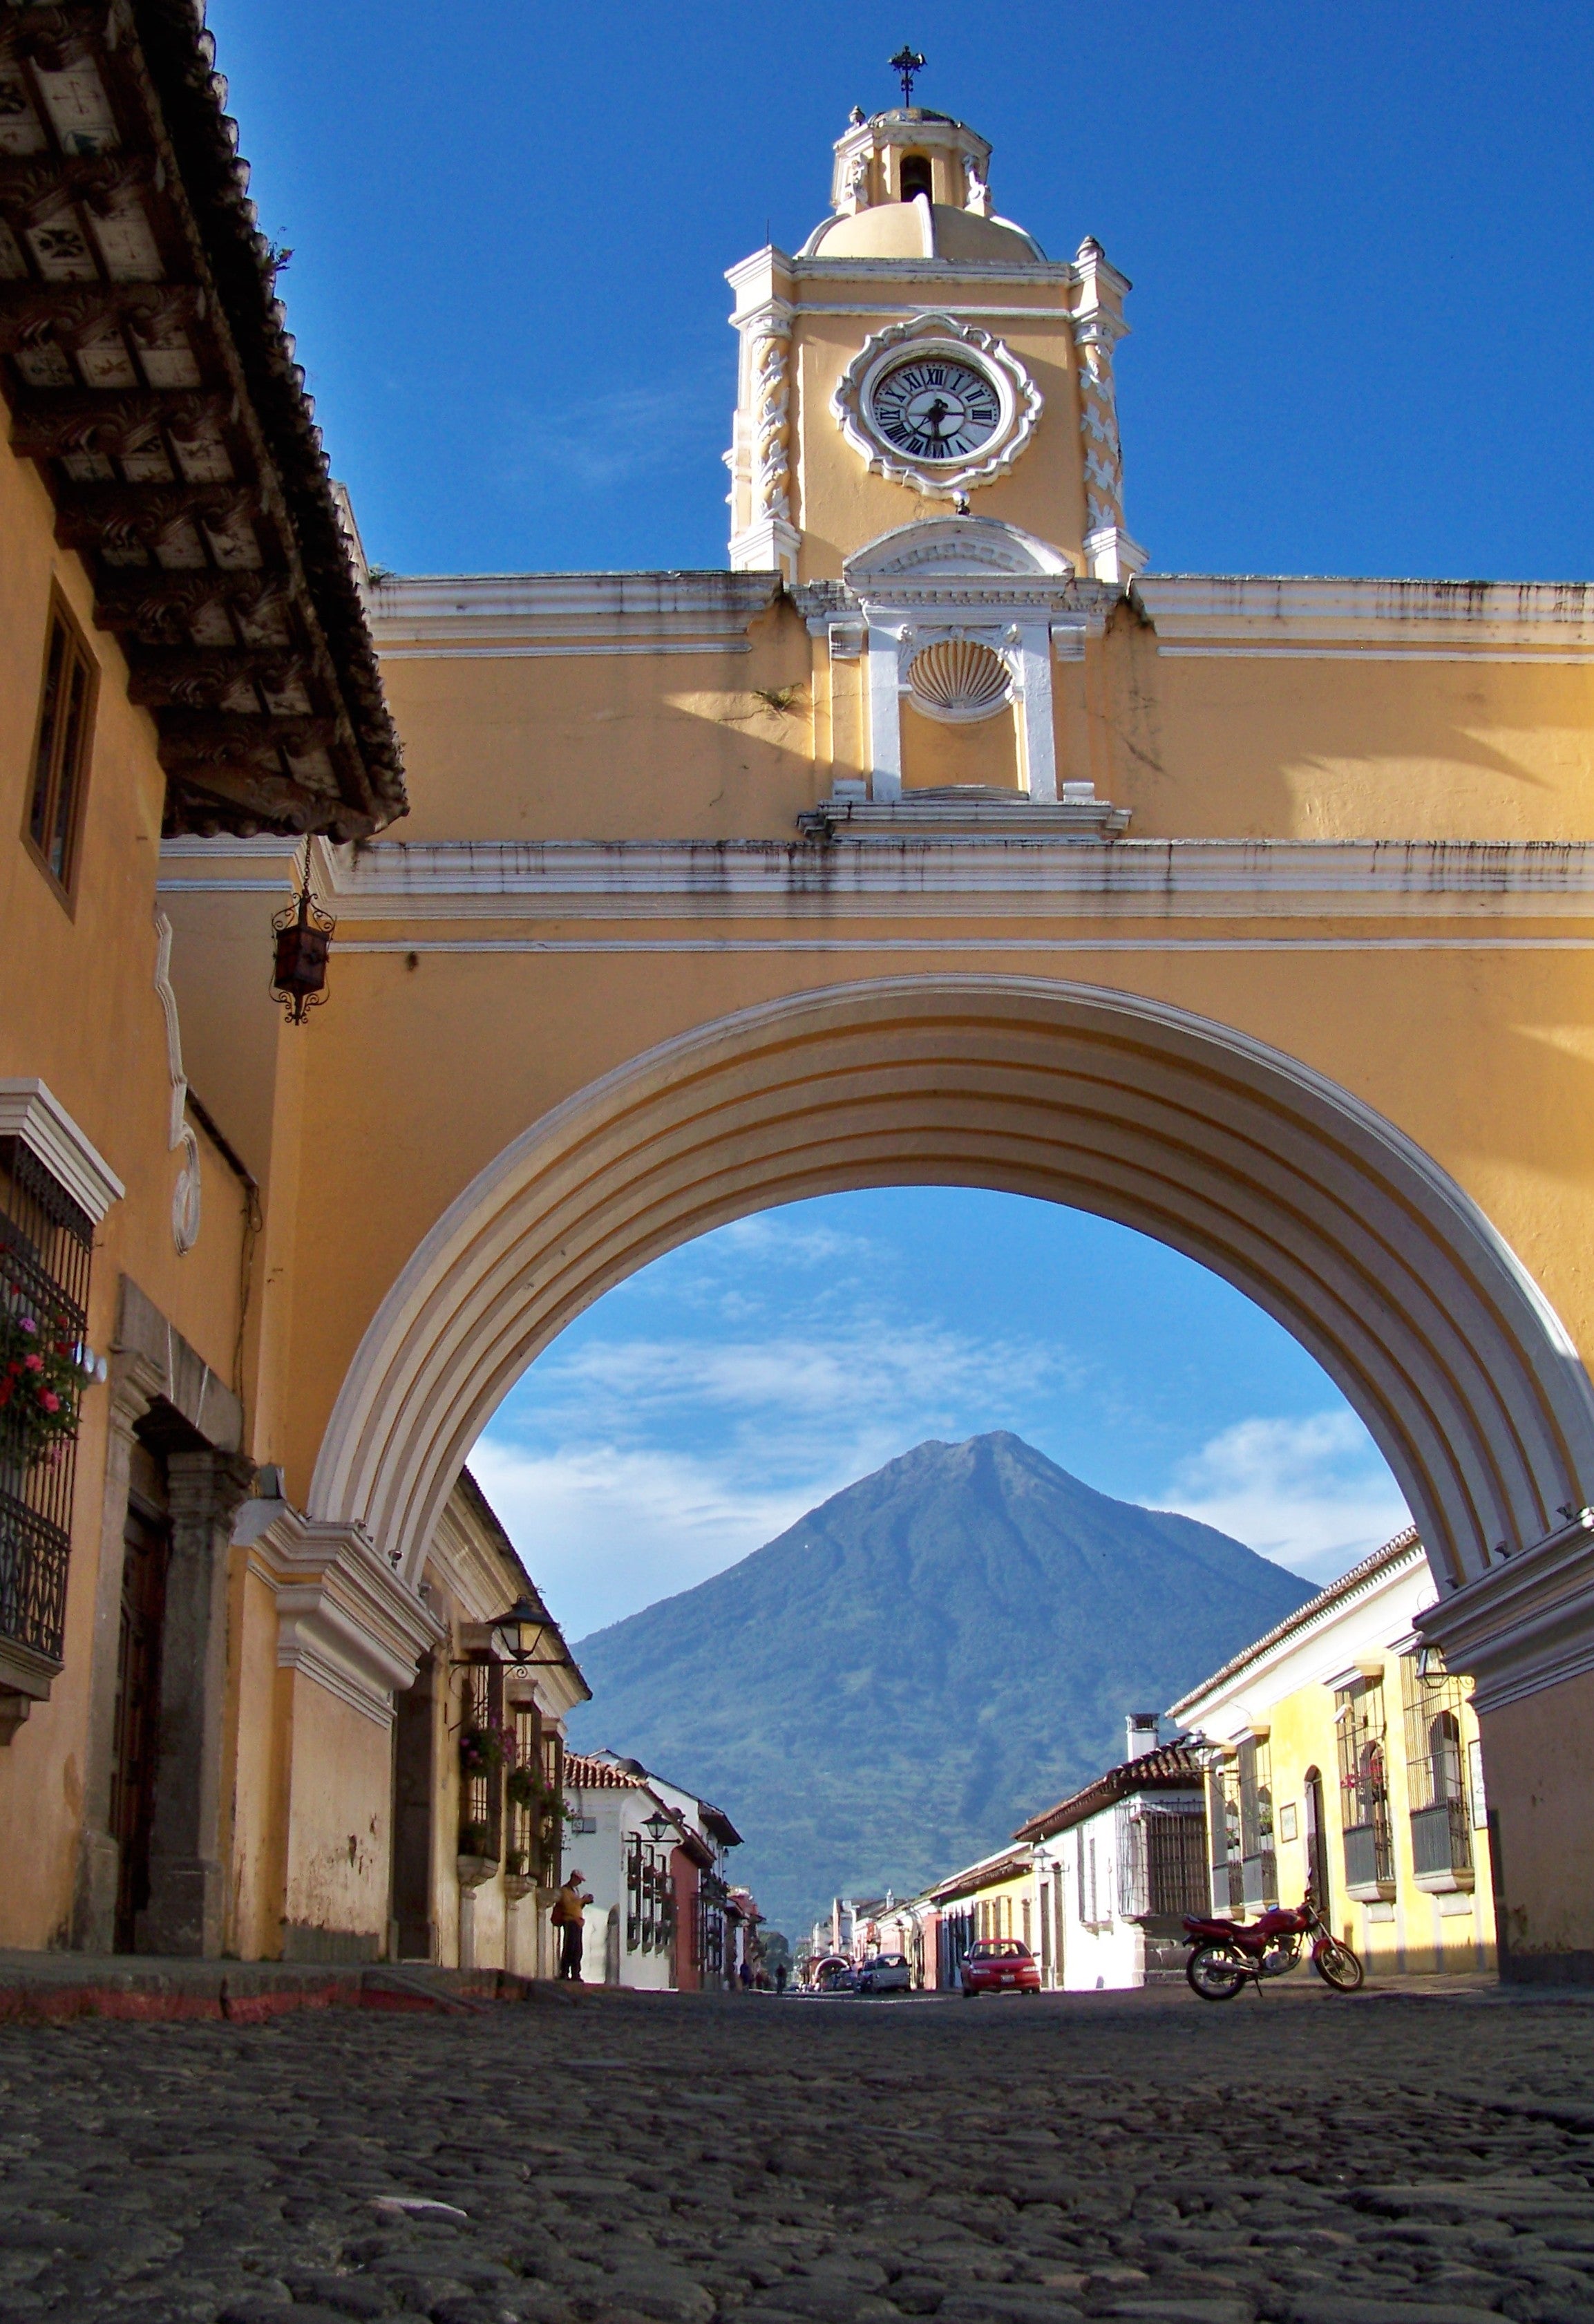 Antigua, Guatemala colonial street